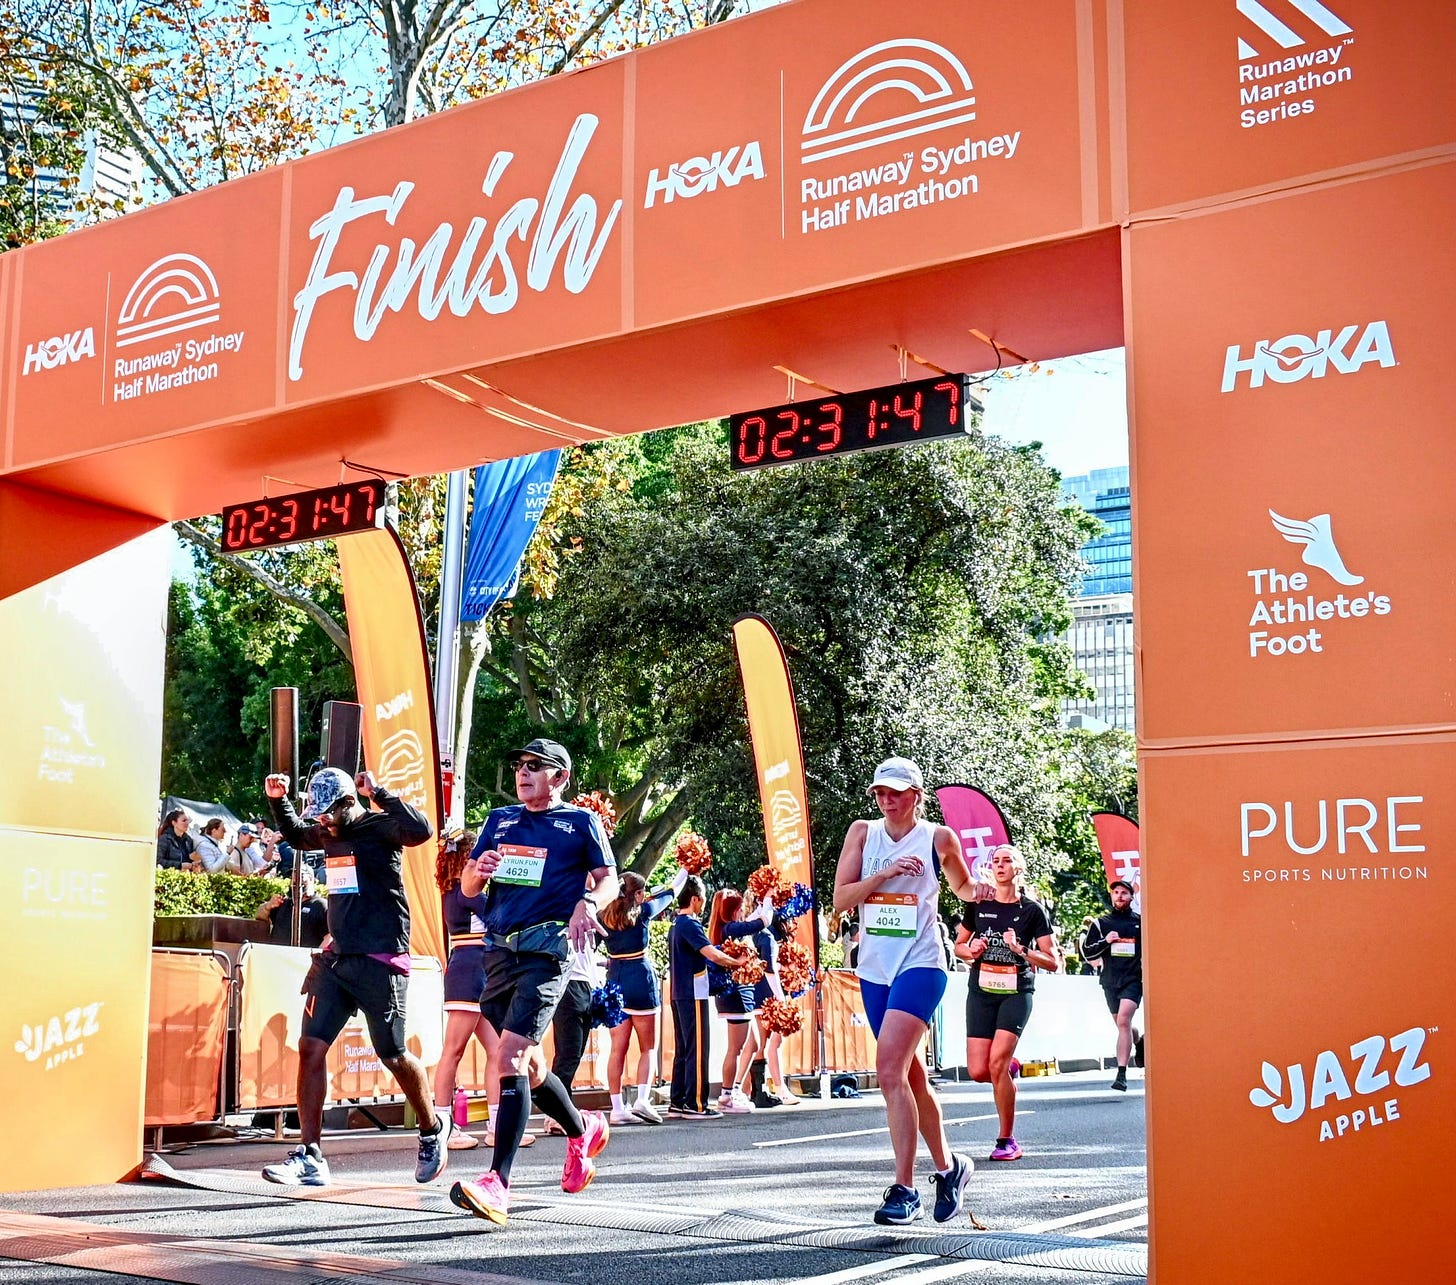 HOKA Runaway Sydney Half Marathon, runners crossing finish line